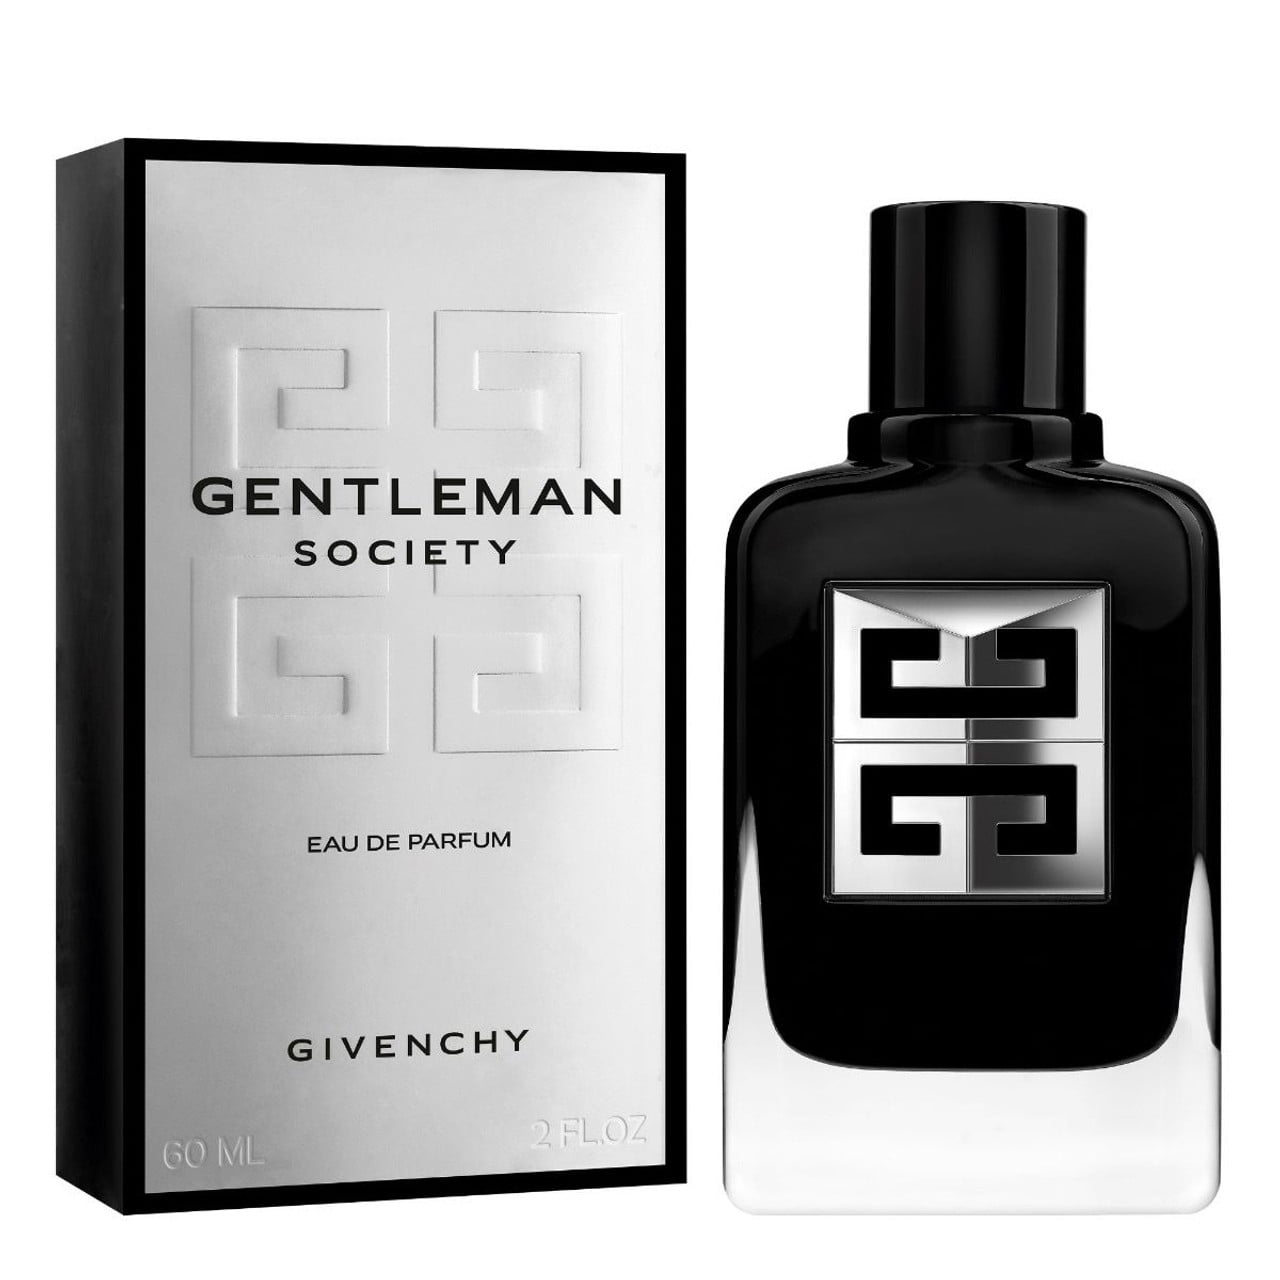 GIVENCHY - Gentleman Society Eau de Parfum 2 oz.